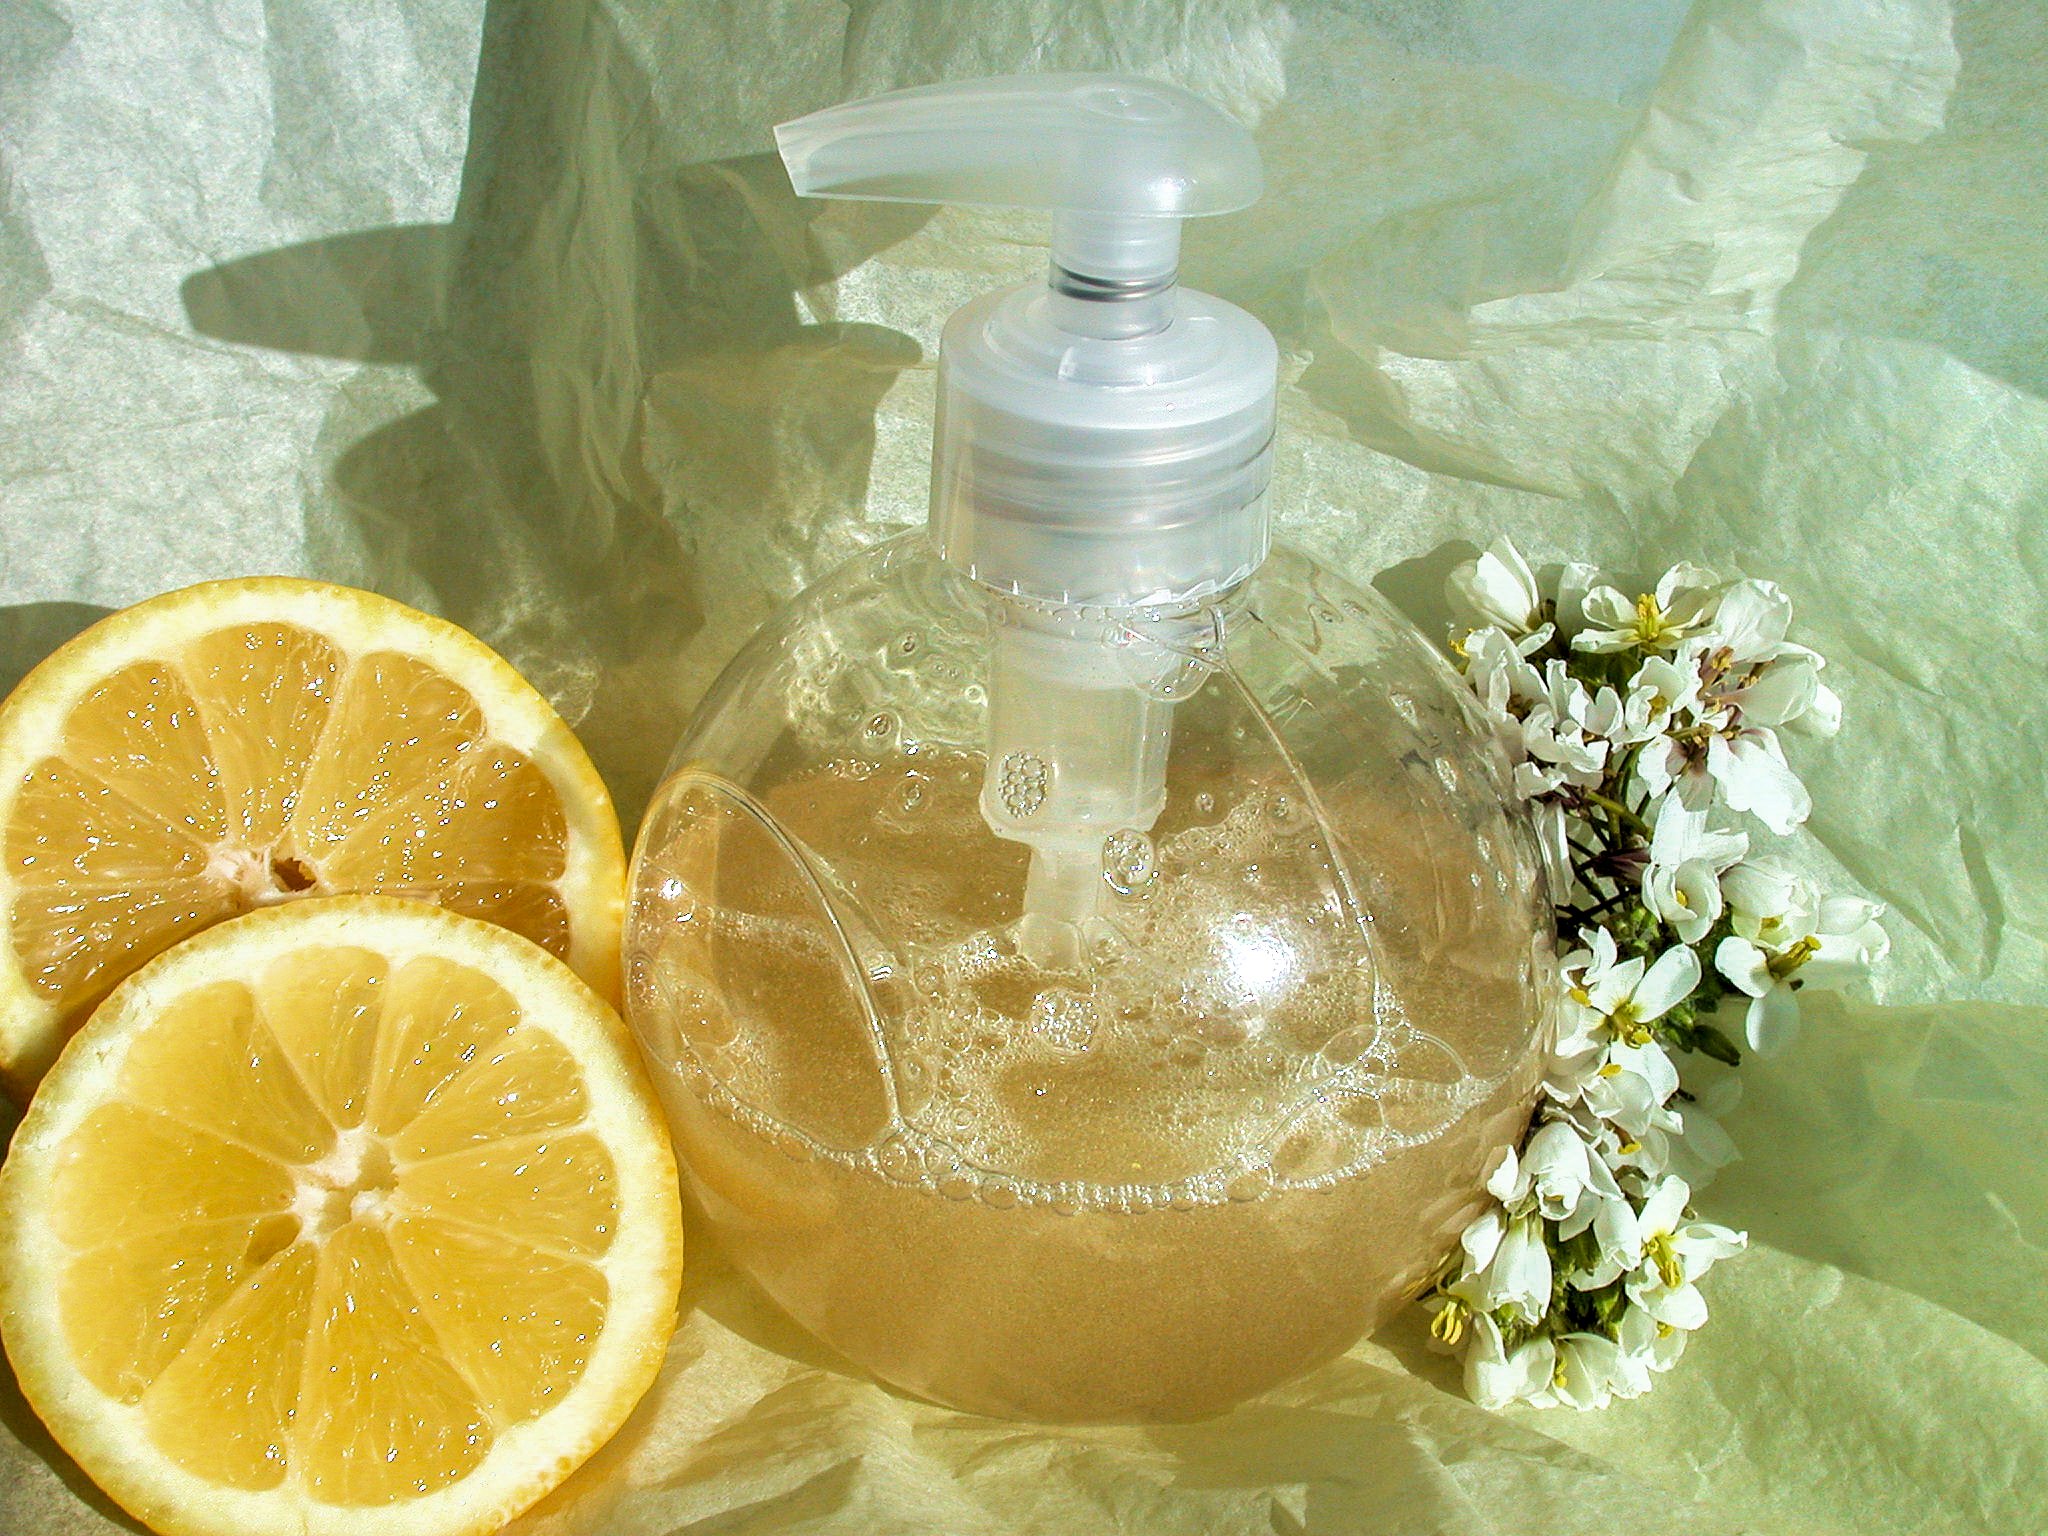 Gel detergente alla Manuka e al Limone purificanti